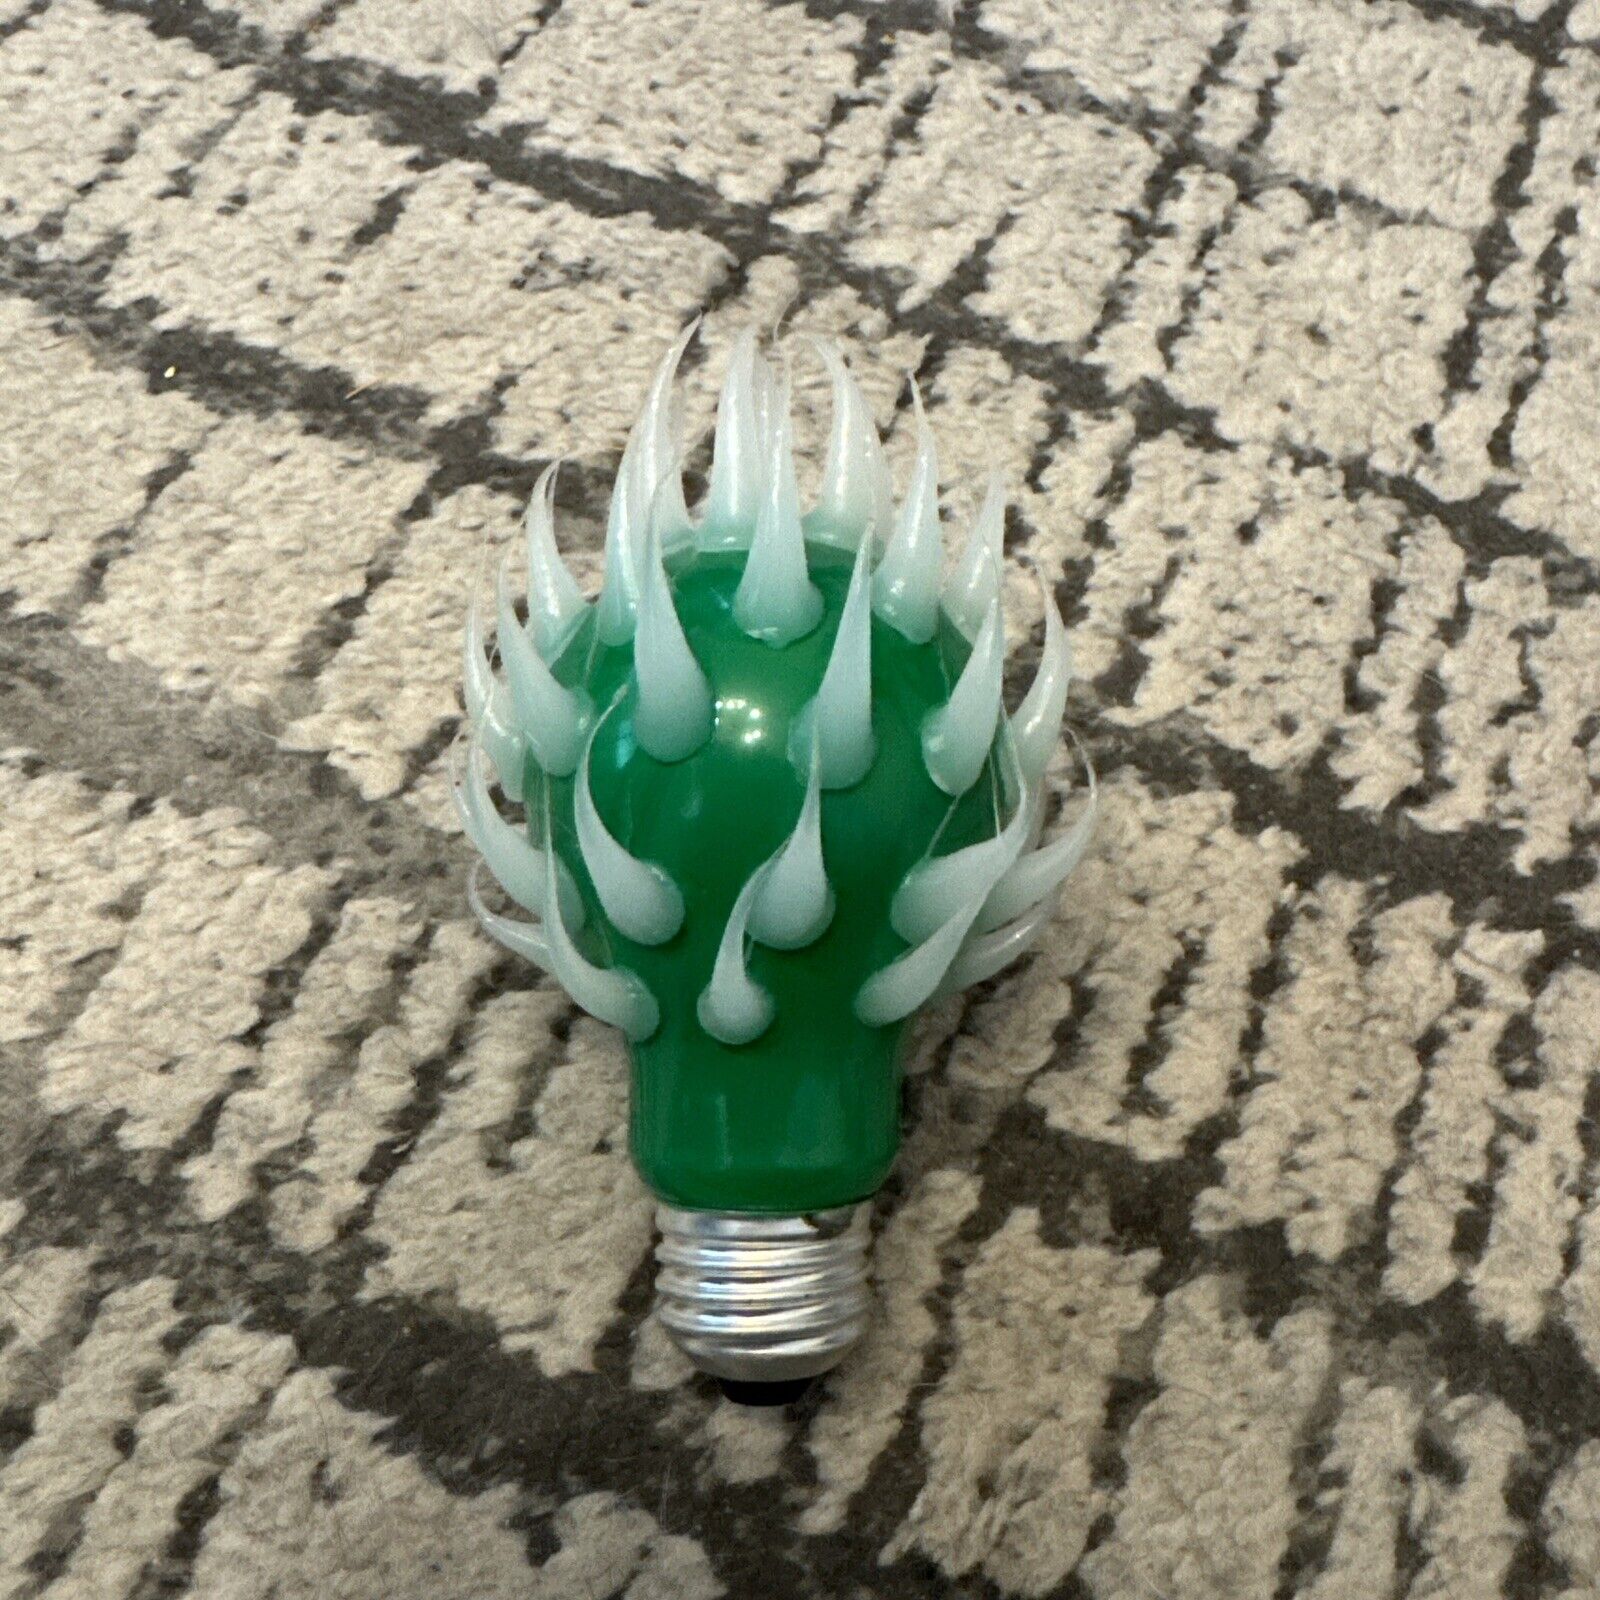 Christmas Retro Neon Green Drip Wax/Rubber style Light Bulb -Works